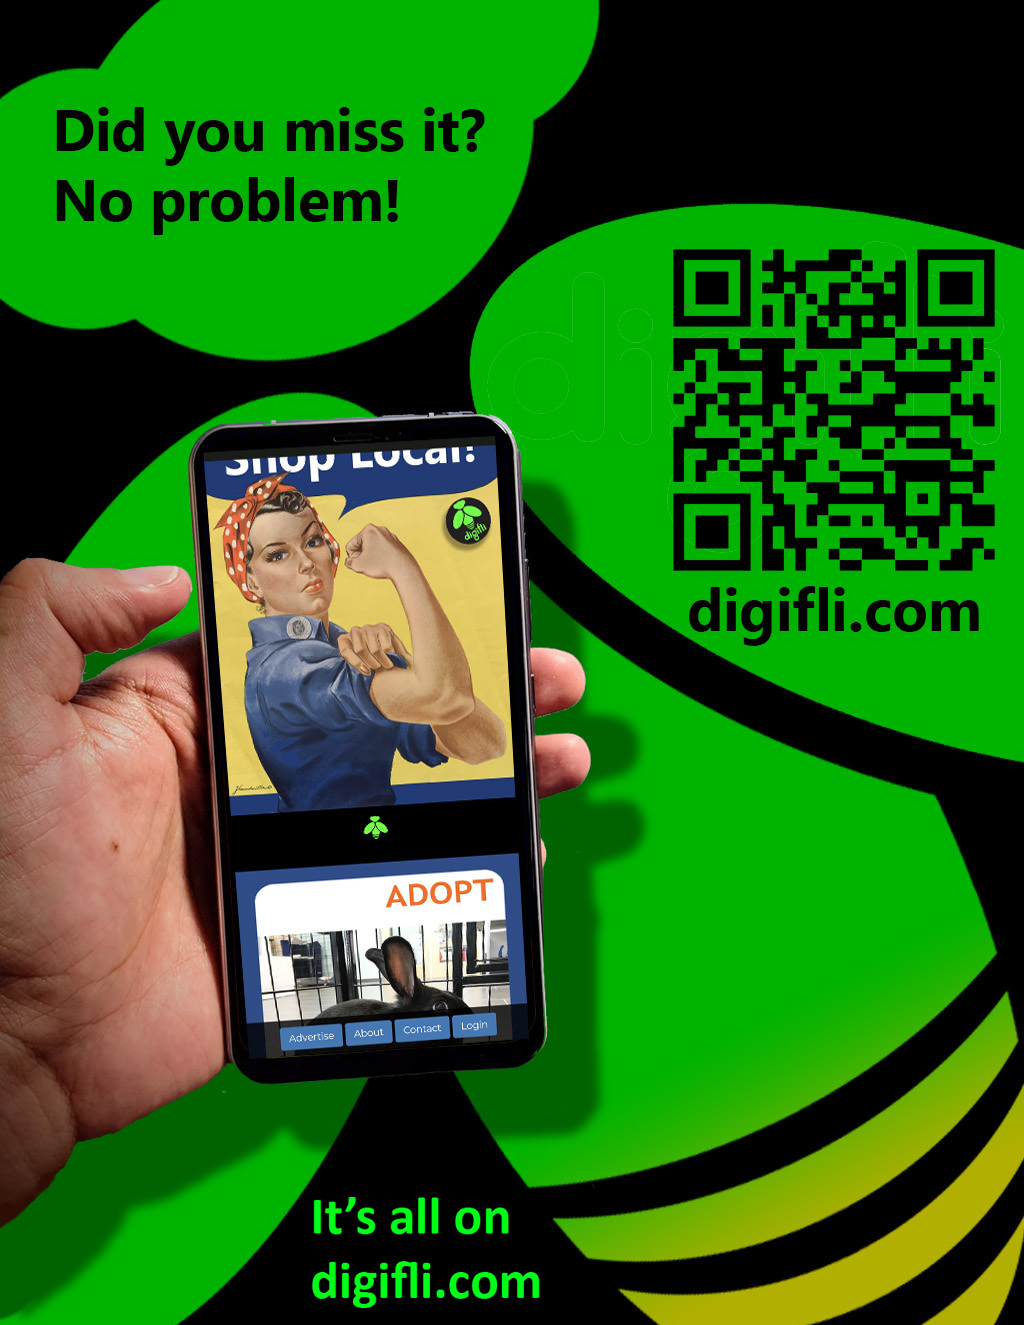 Digifli Community Bulletin Boards Miss Something  Digifli com Has You Covered  promotion flier on Digifli com